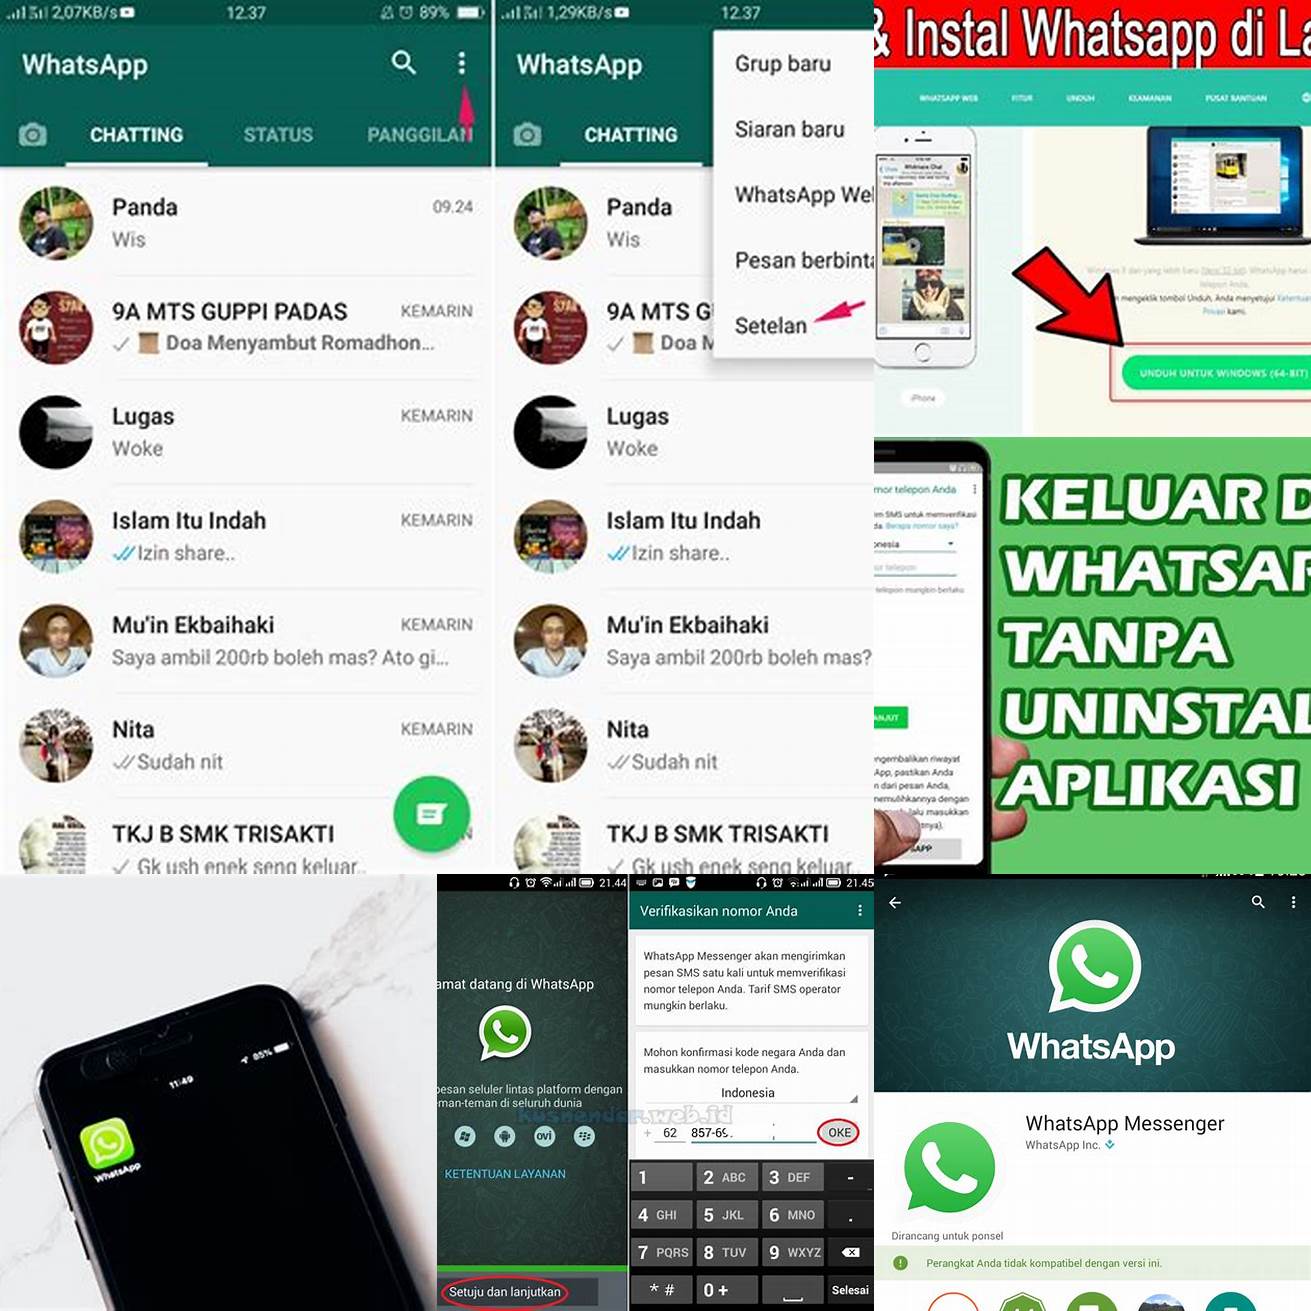 1 Buka aplikasi WhatsApp dan masuk ke akun Anda